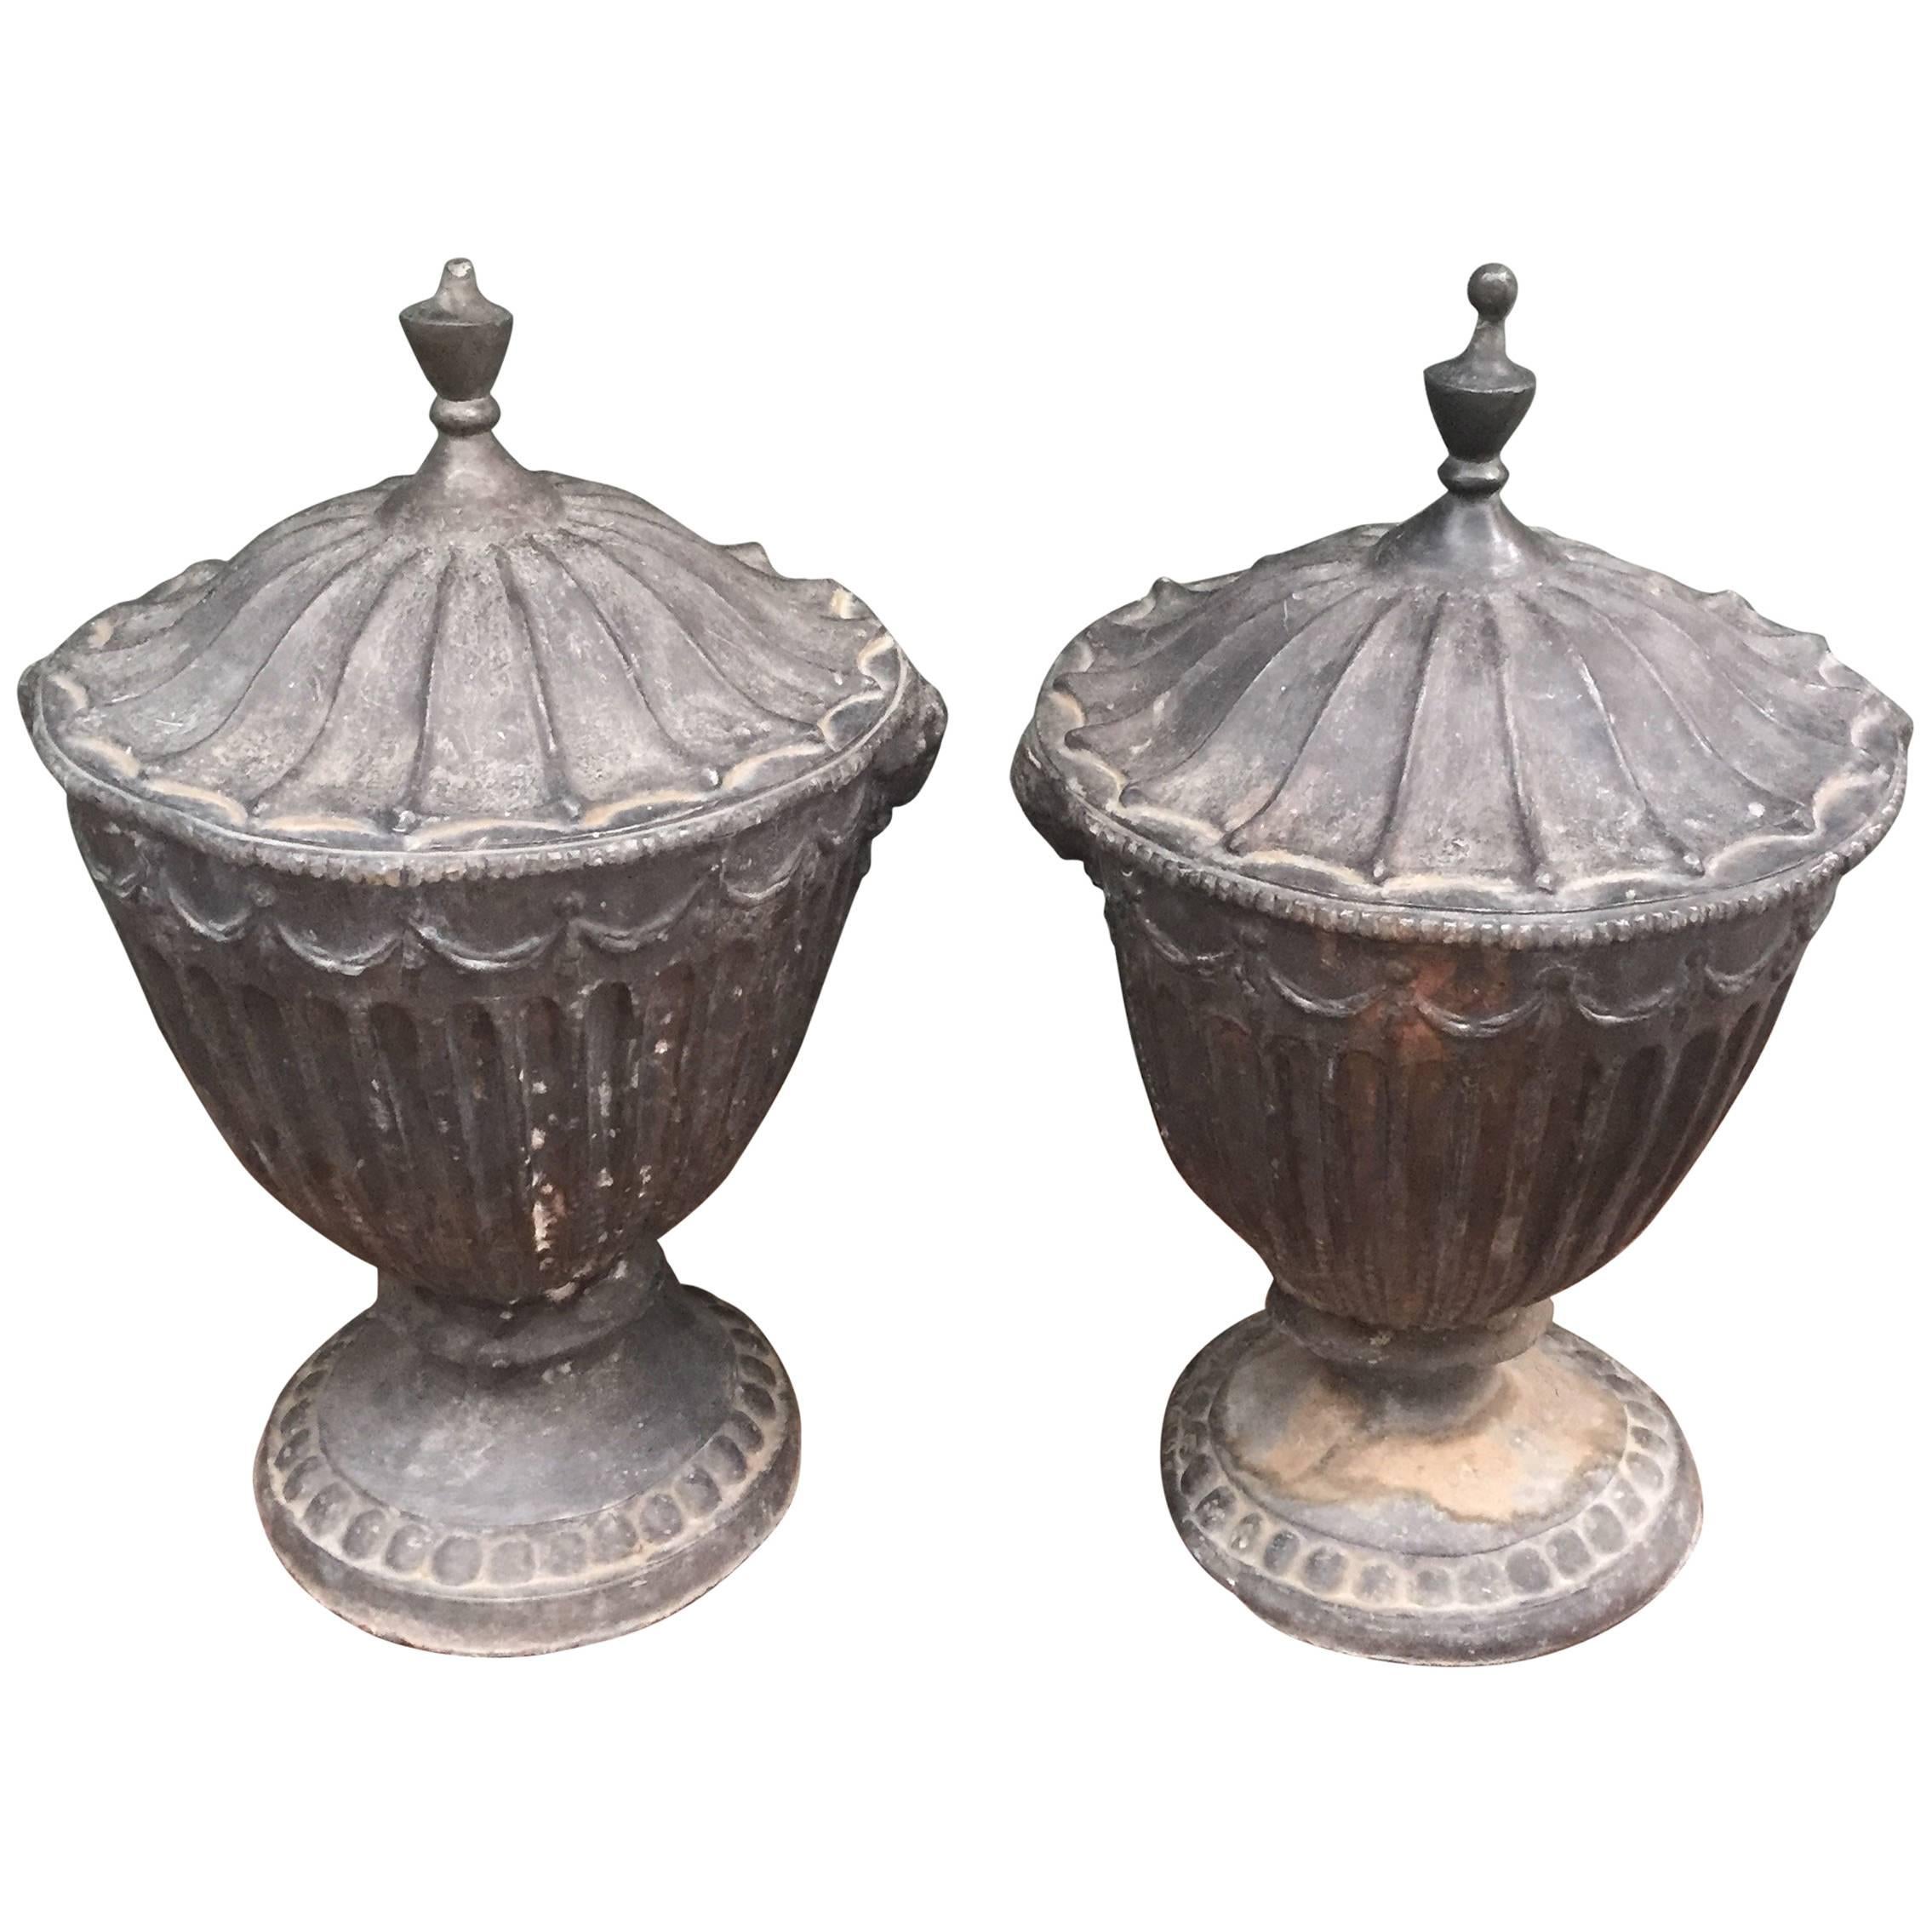 Pair of 19th Century English Lead Urns